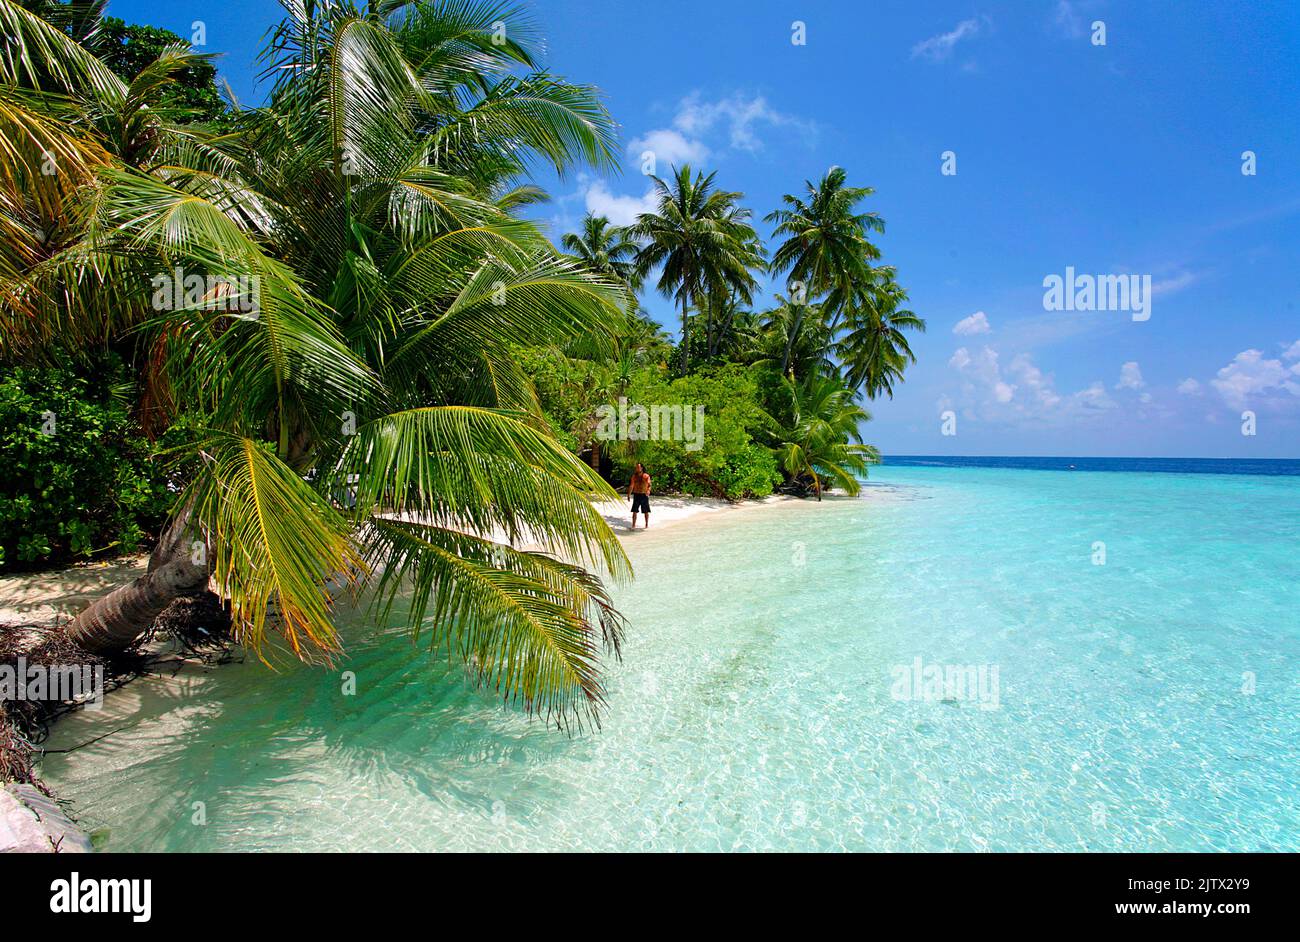 Playa, palmeras y la laguna turquesa de una isla maldiva deshabitada, Maldivas, Océano Indisano, Asia Foto de stock